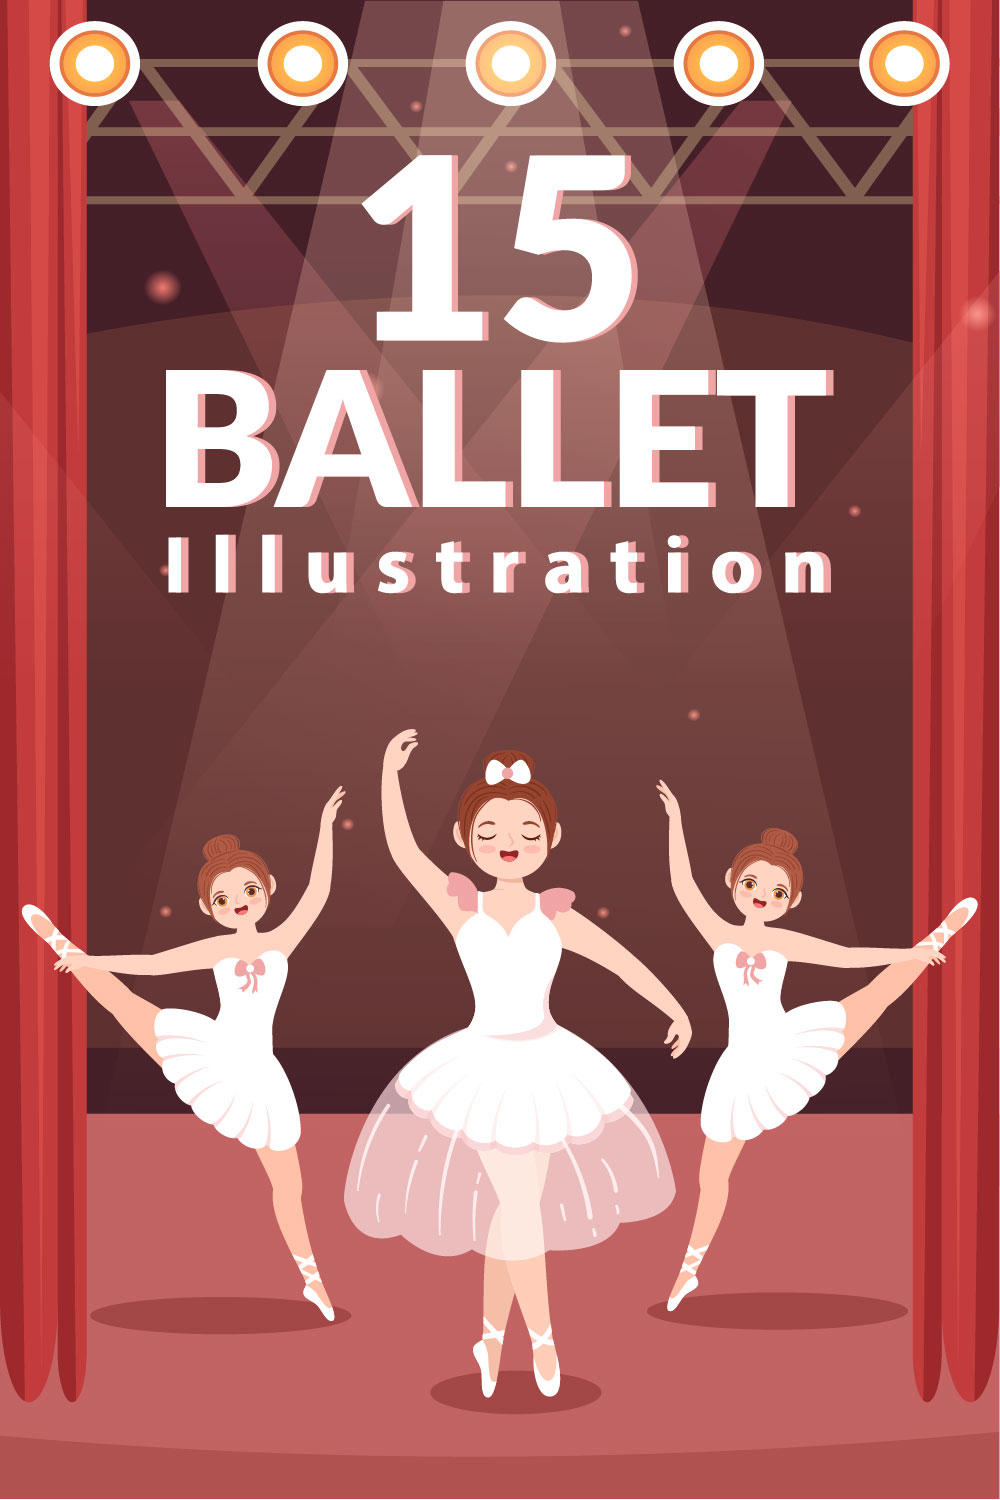 15 Ballet or Ballerina Illustration pinterest image.